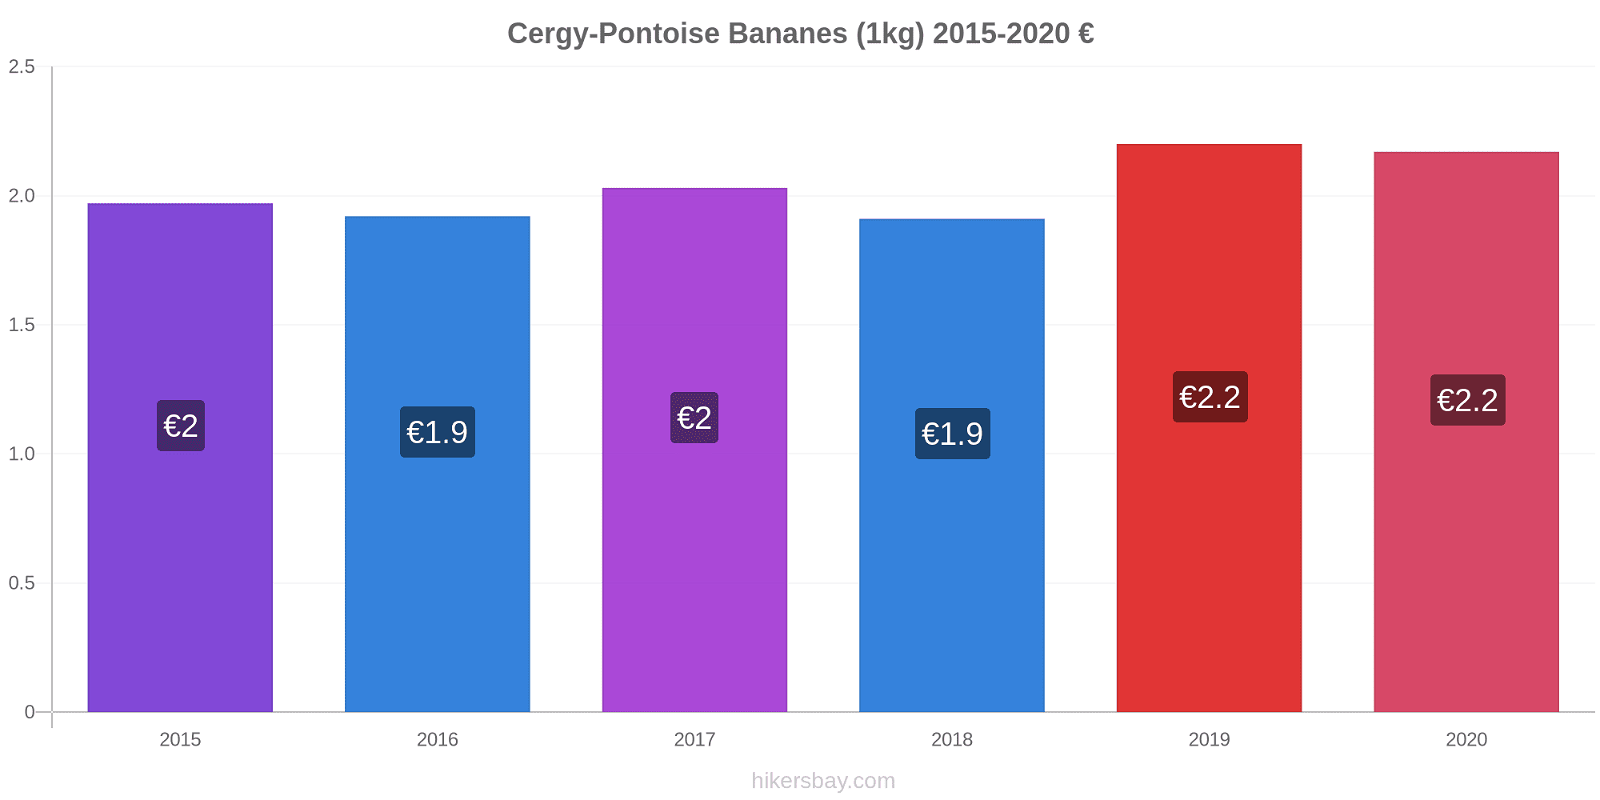 Cergy-Pontoise changements de prix Bananes (1kg) hikersbay.com